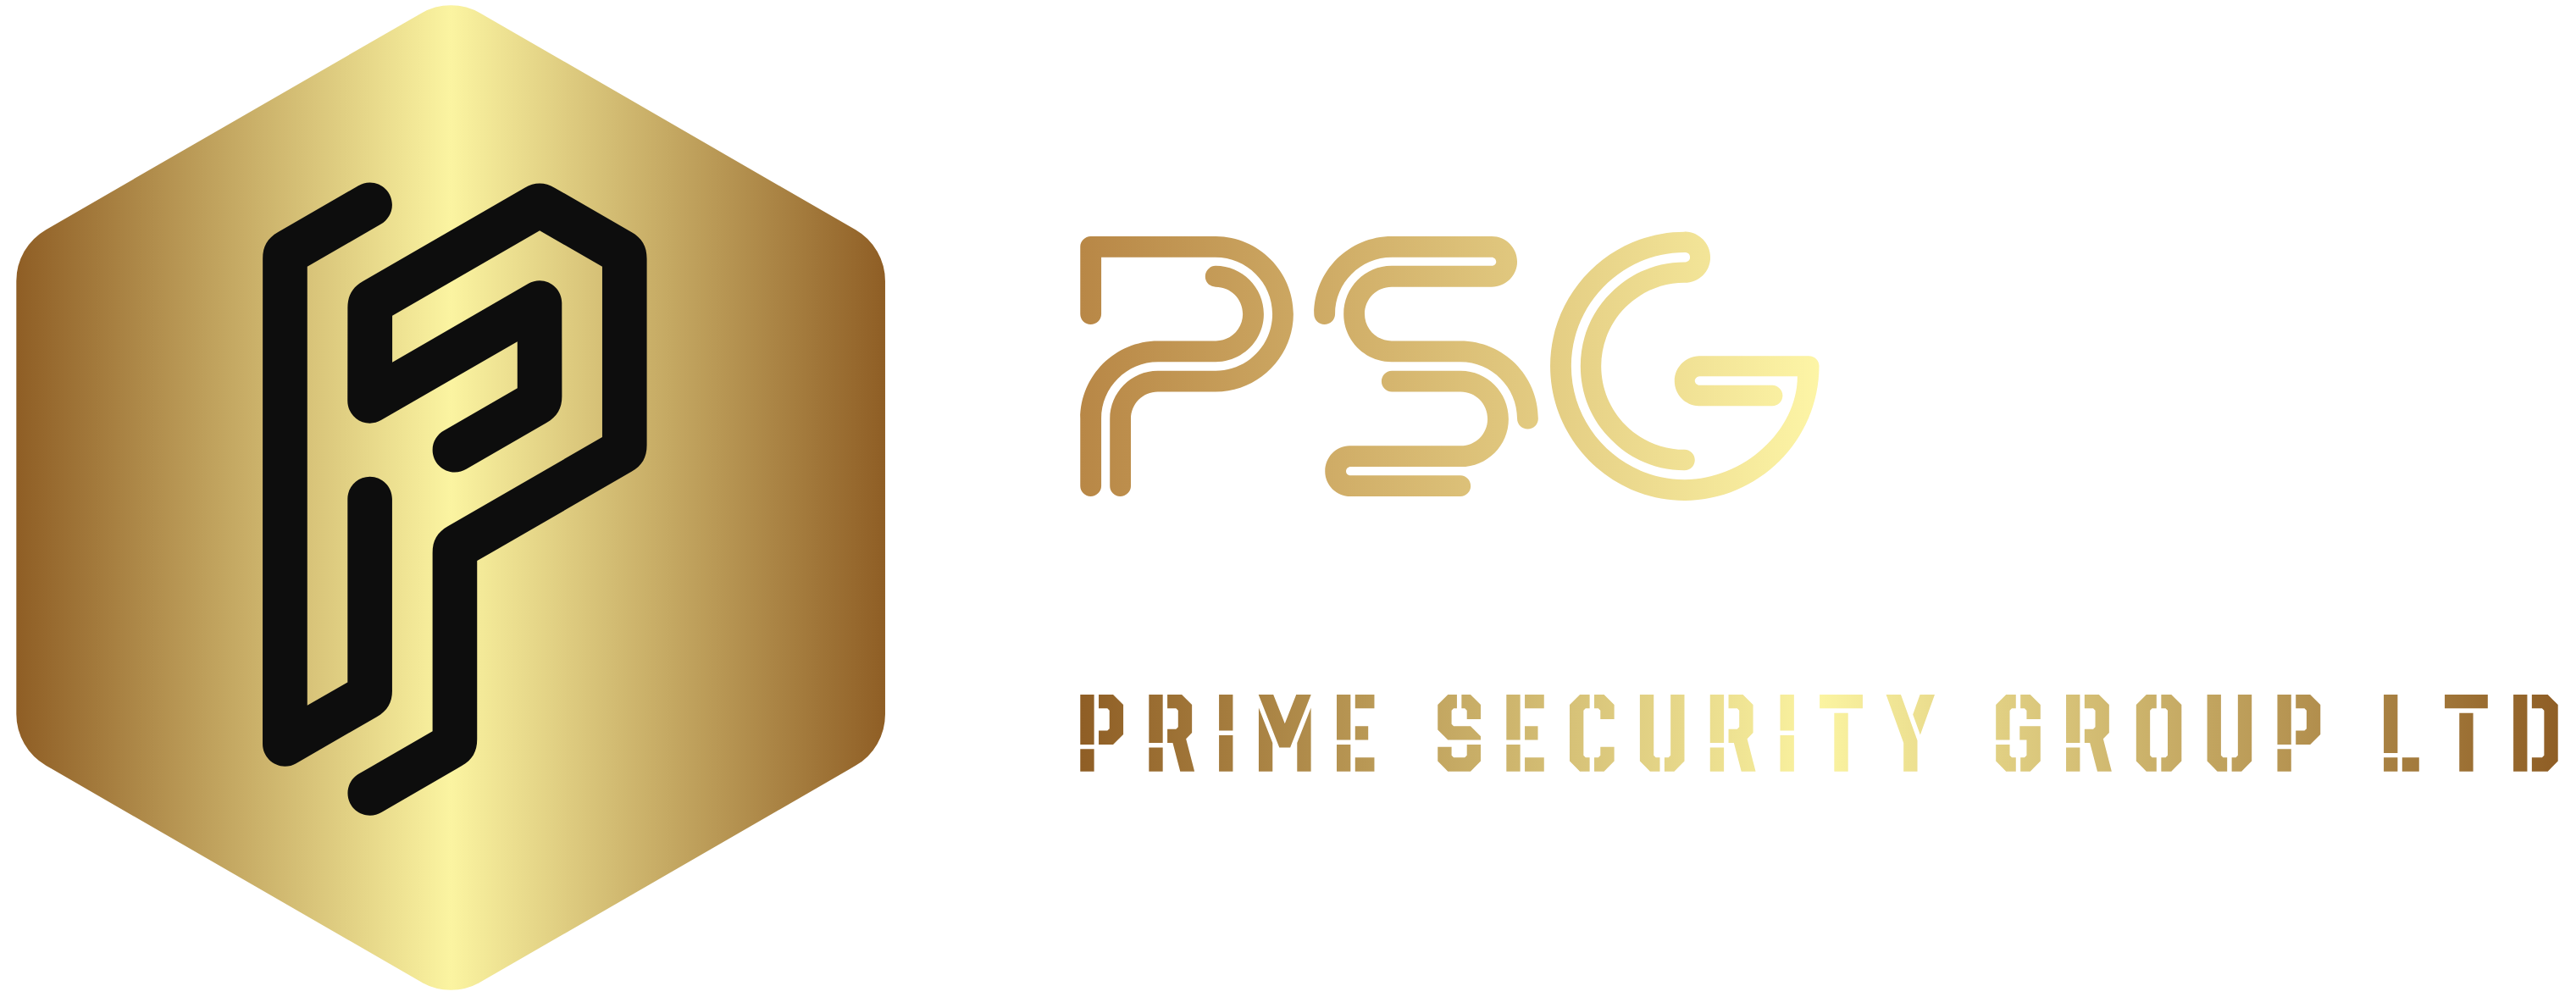 Prime Security Group Ltd.